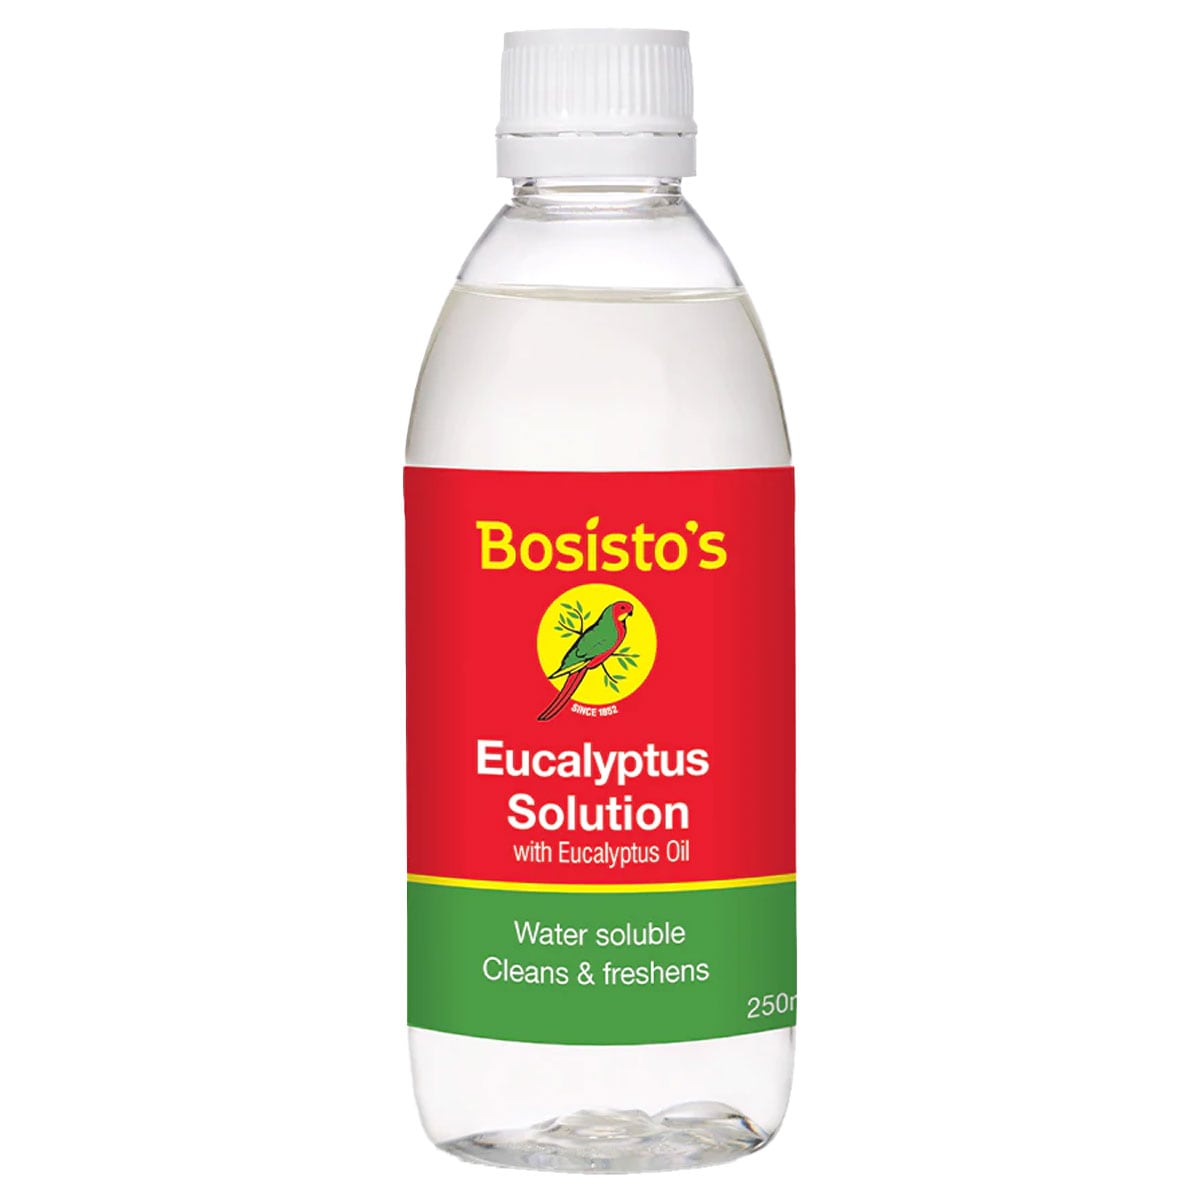 Bosistos Eucalyptus Solution 250ml